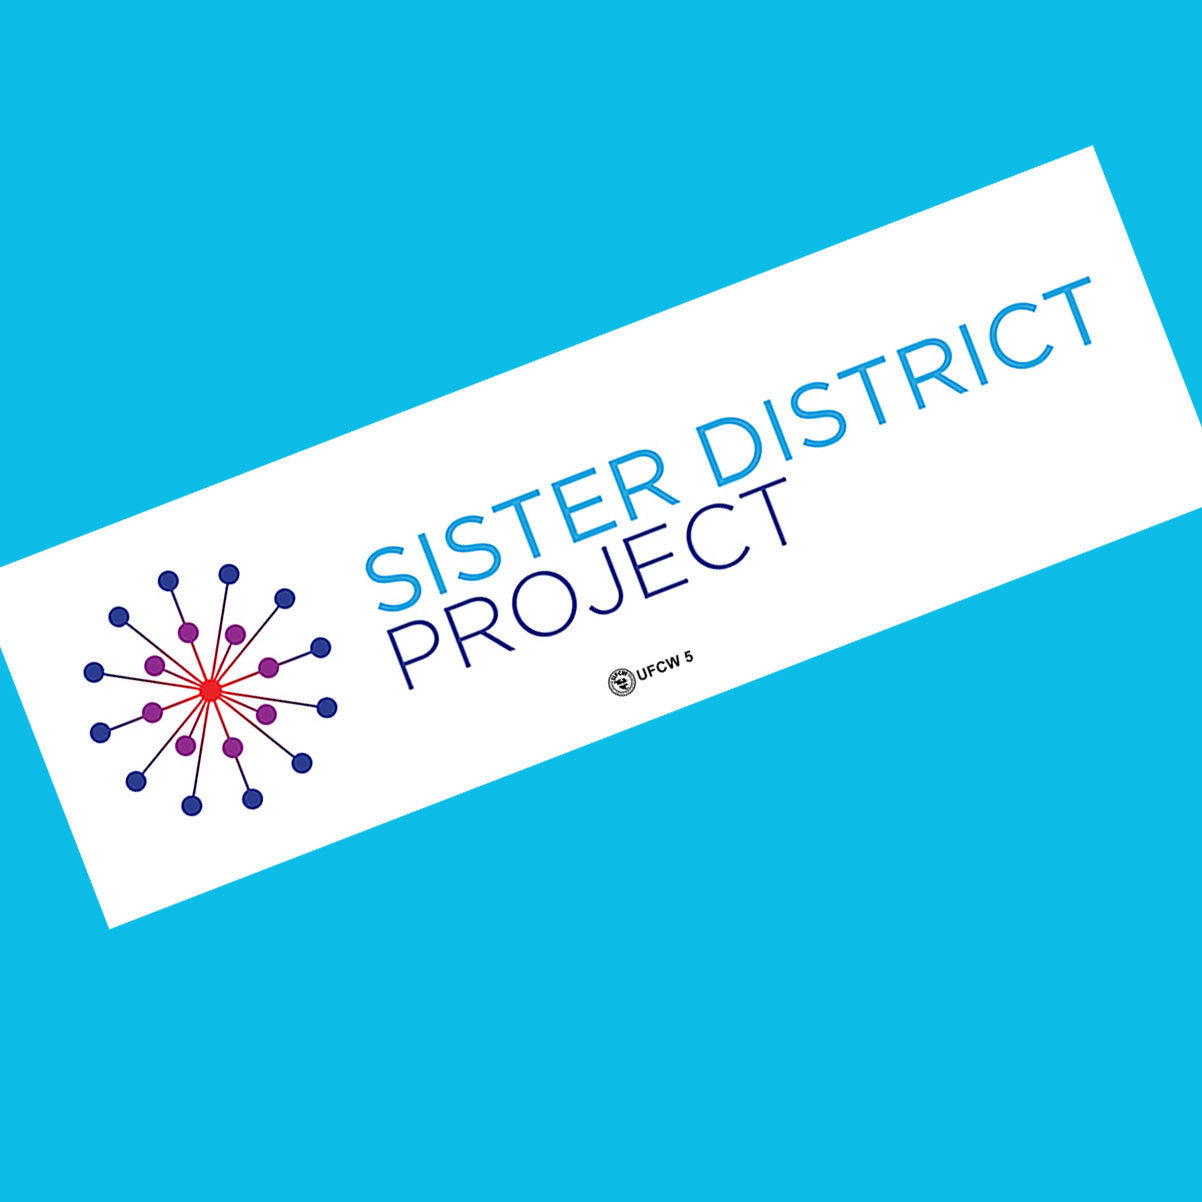 Sister District Project Bumper Sticker